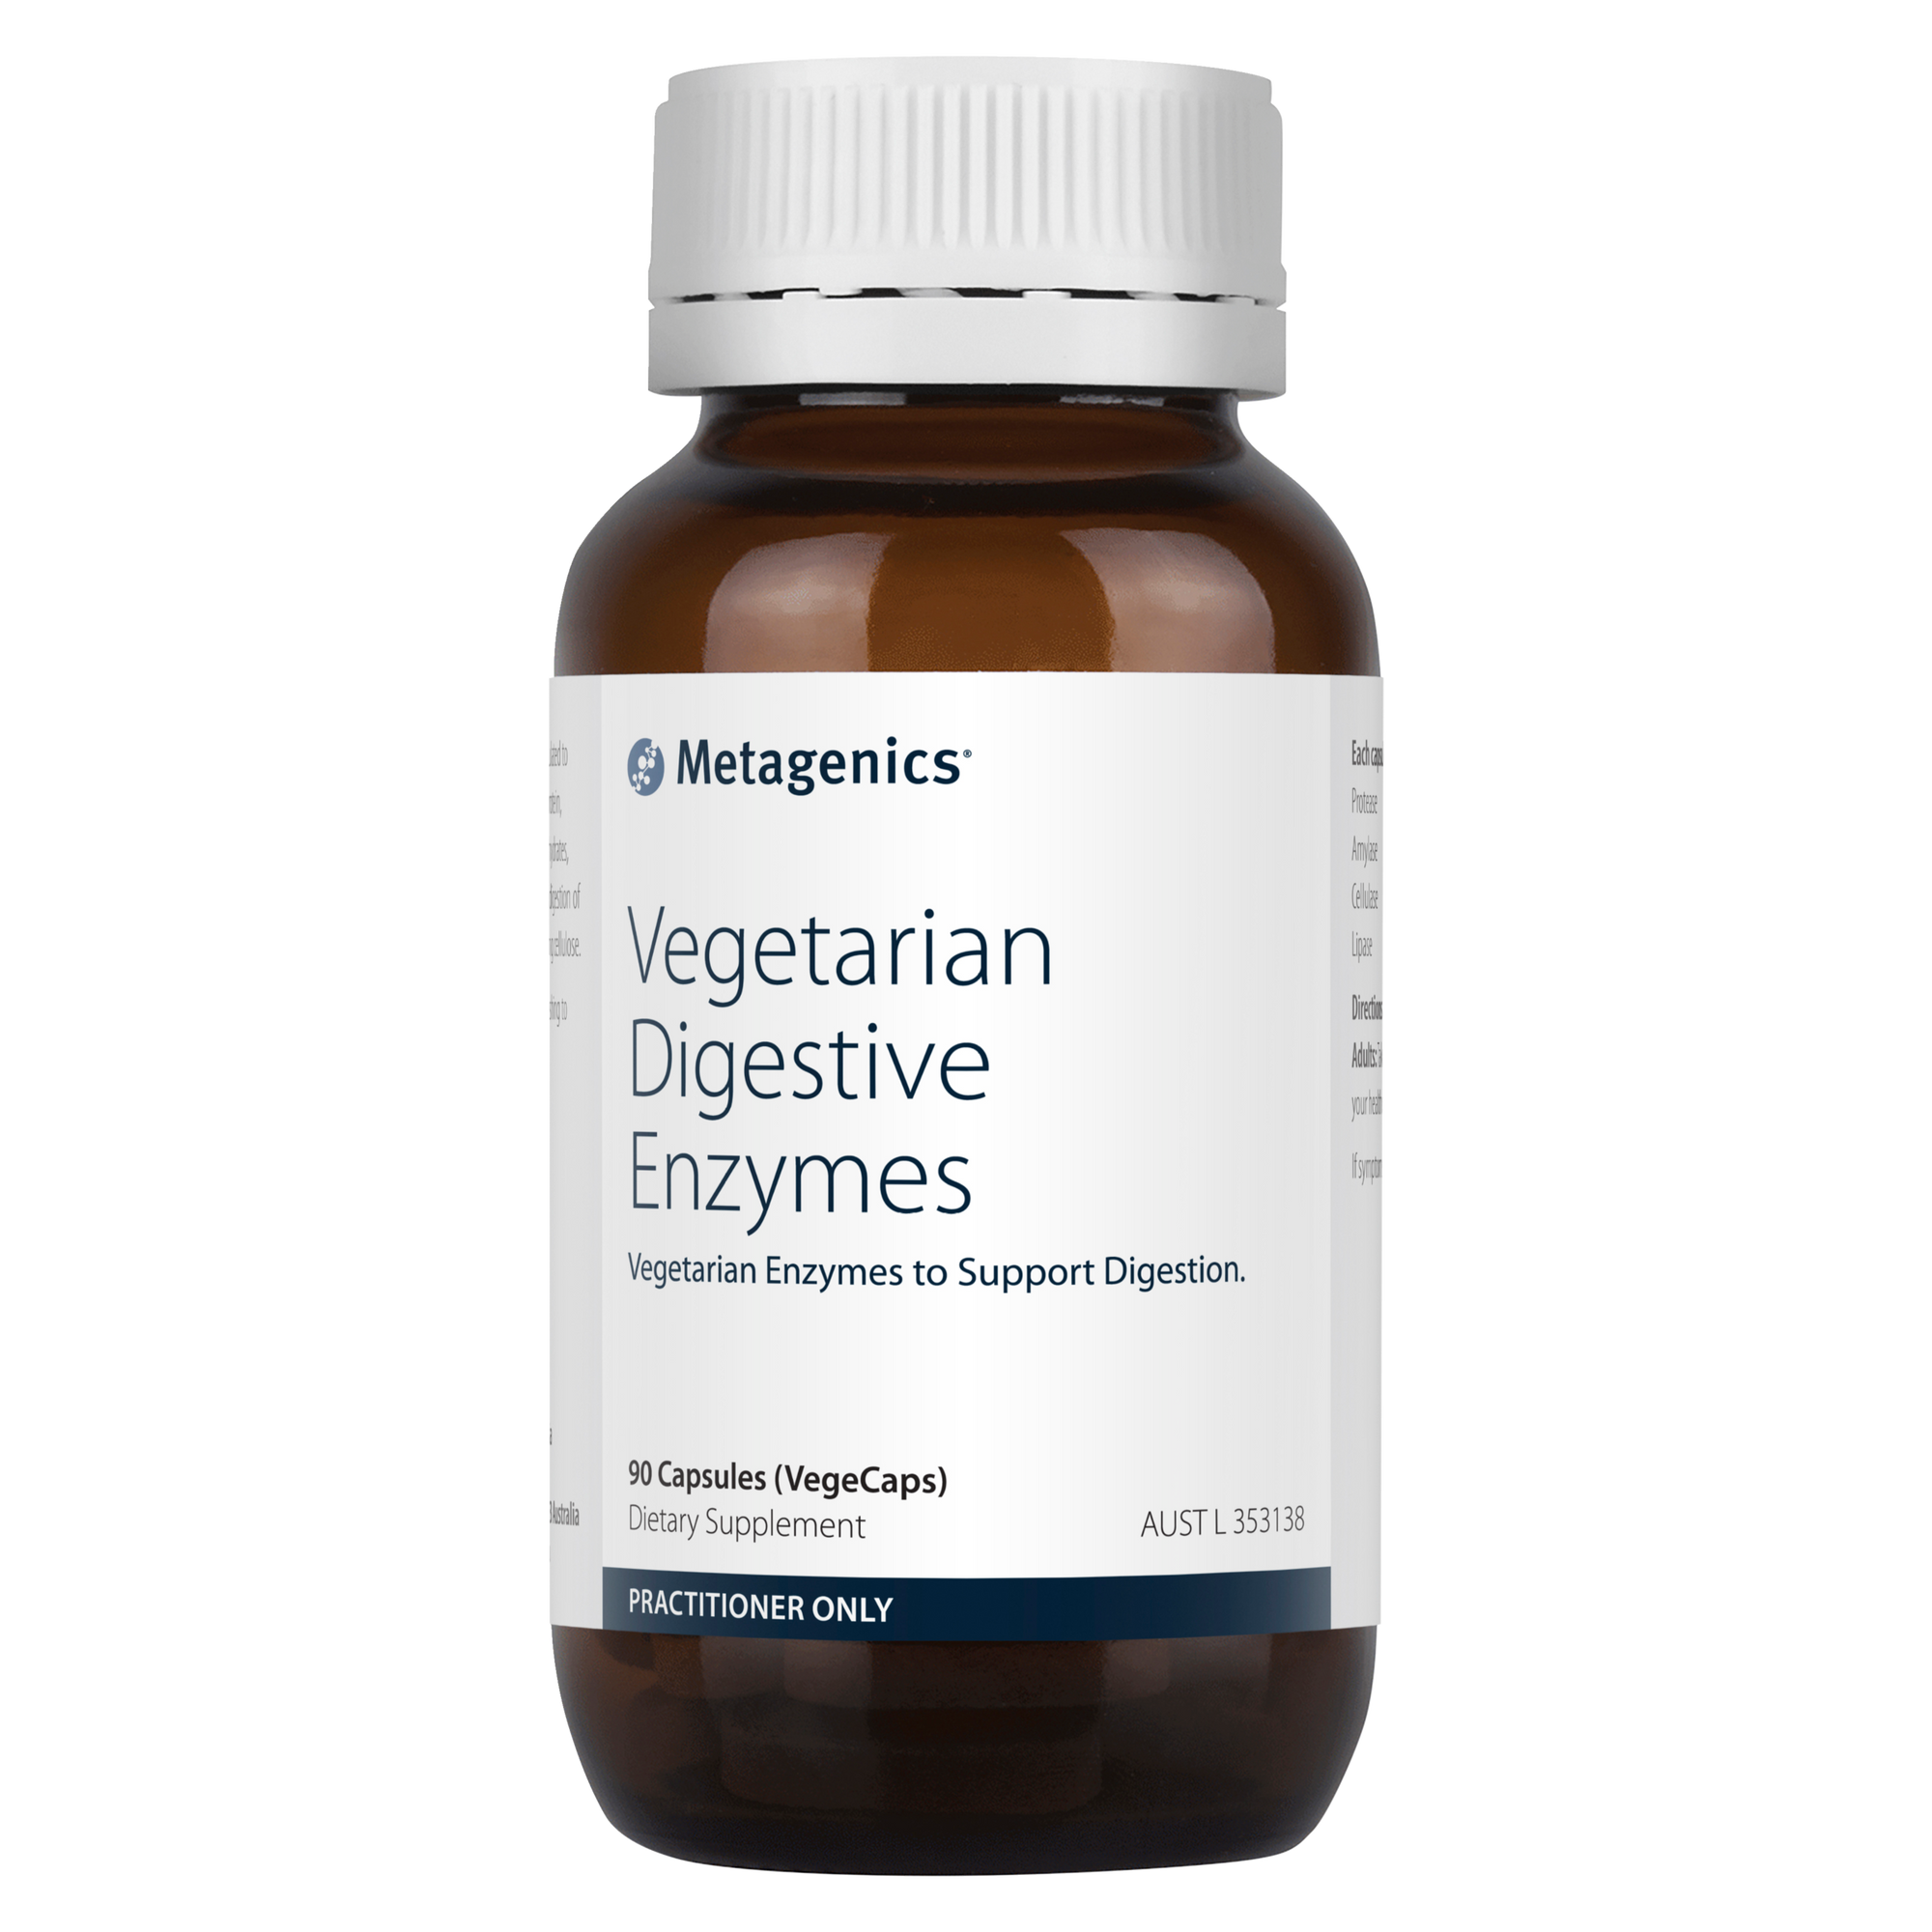 Metagenics Vegetarian Digestive Enzymes 90 Capsules (VegeCaps)